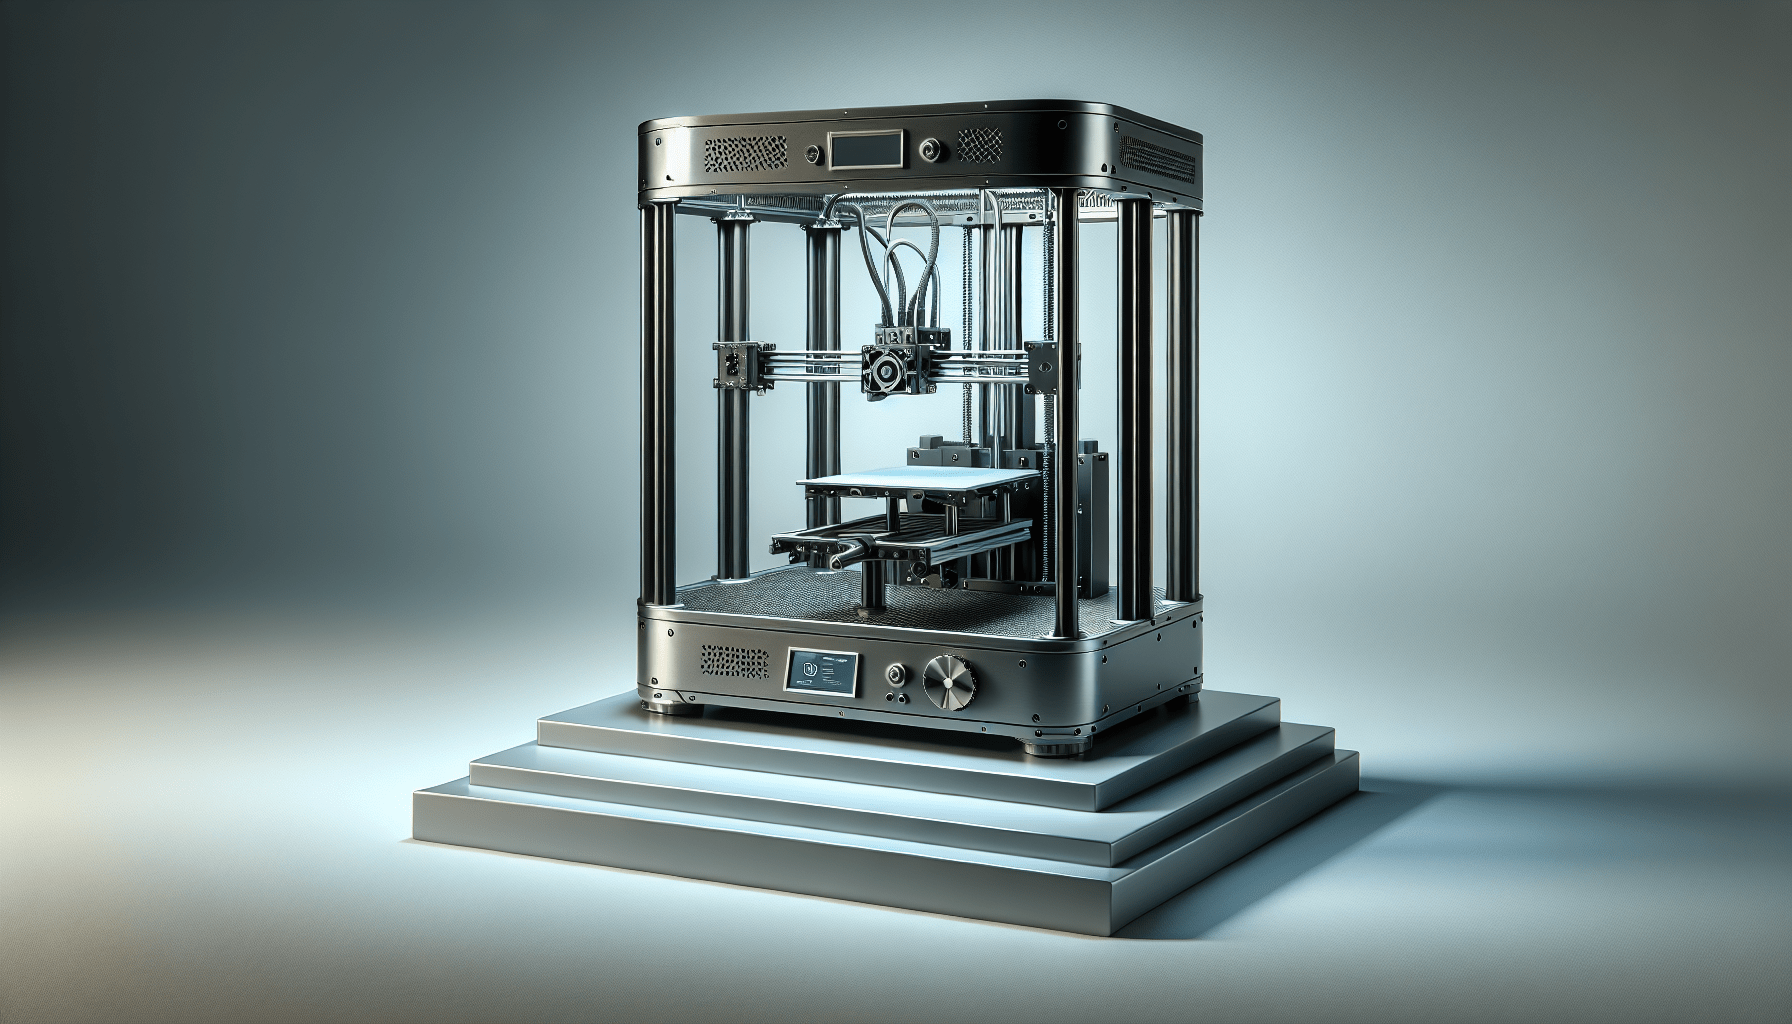 Stratasys to unveil new J5 Digital Anatomy 3D printer at RAPID + TCT